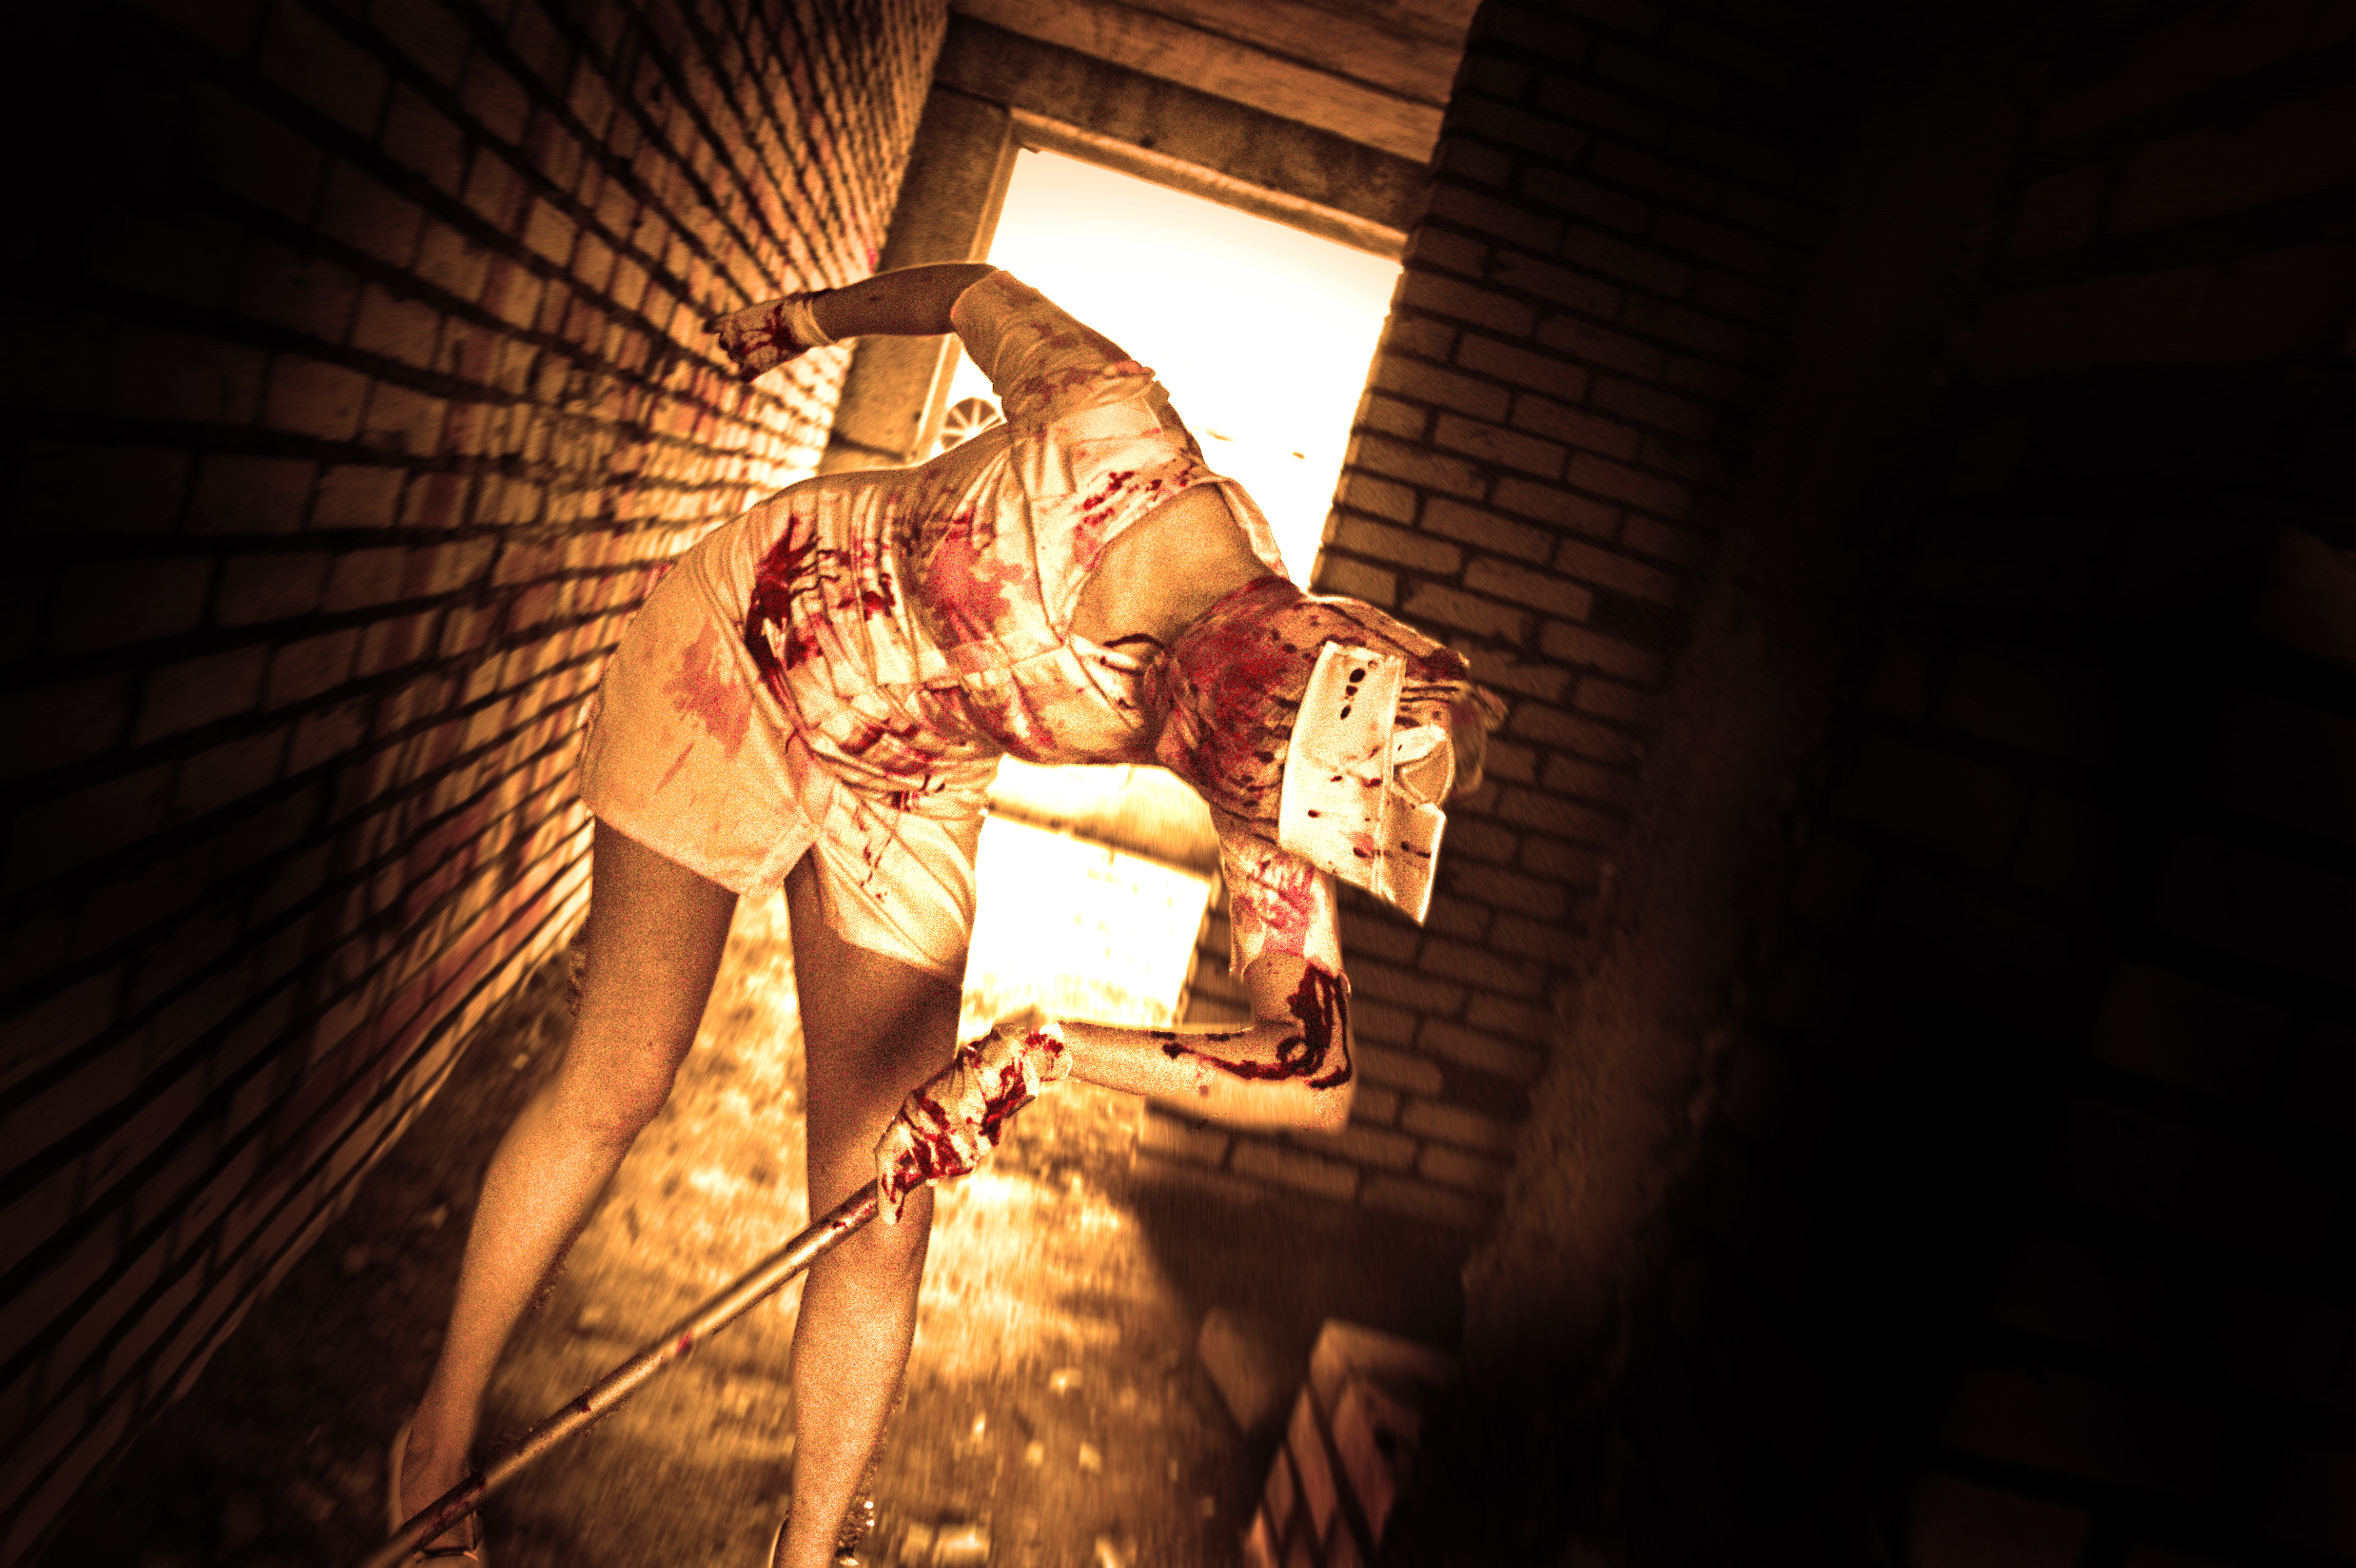 Silent Hill Nurse Image Crazy Gallery